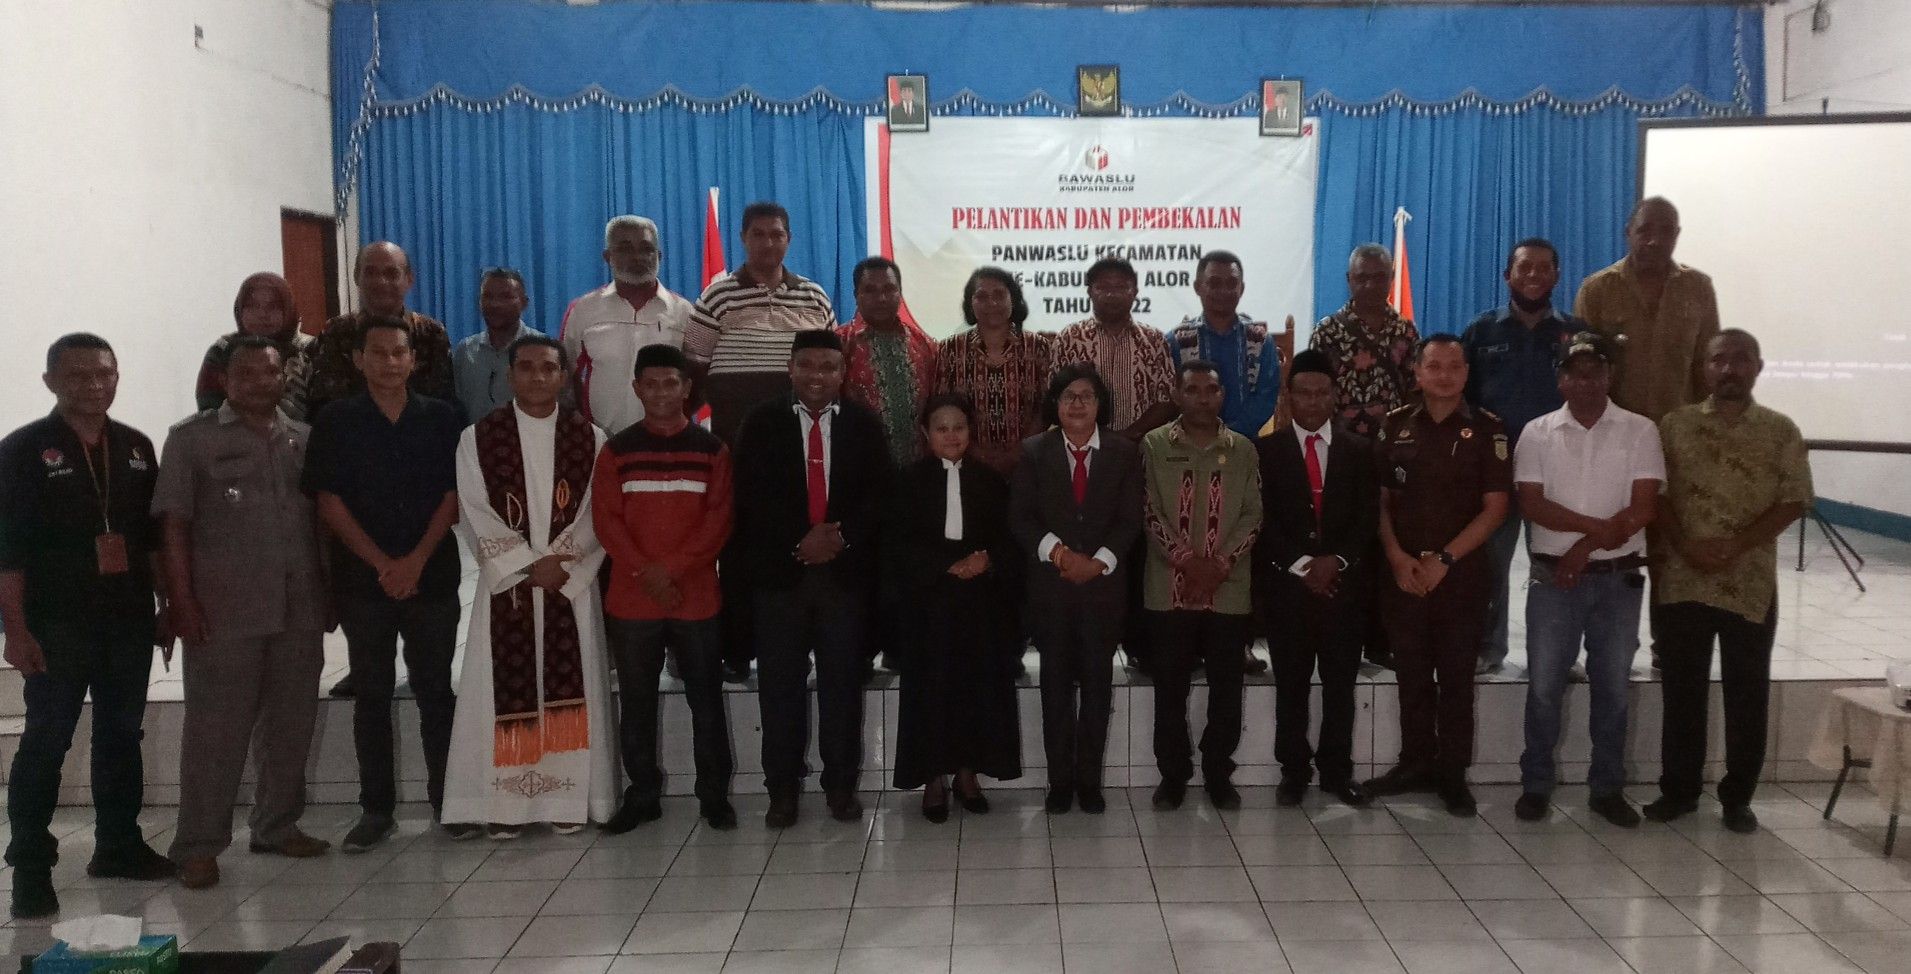 Foto bersama usai acara pelantikan Panwaslu Kecamatan se-Kabupaten Alor